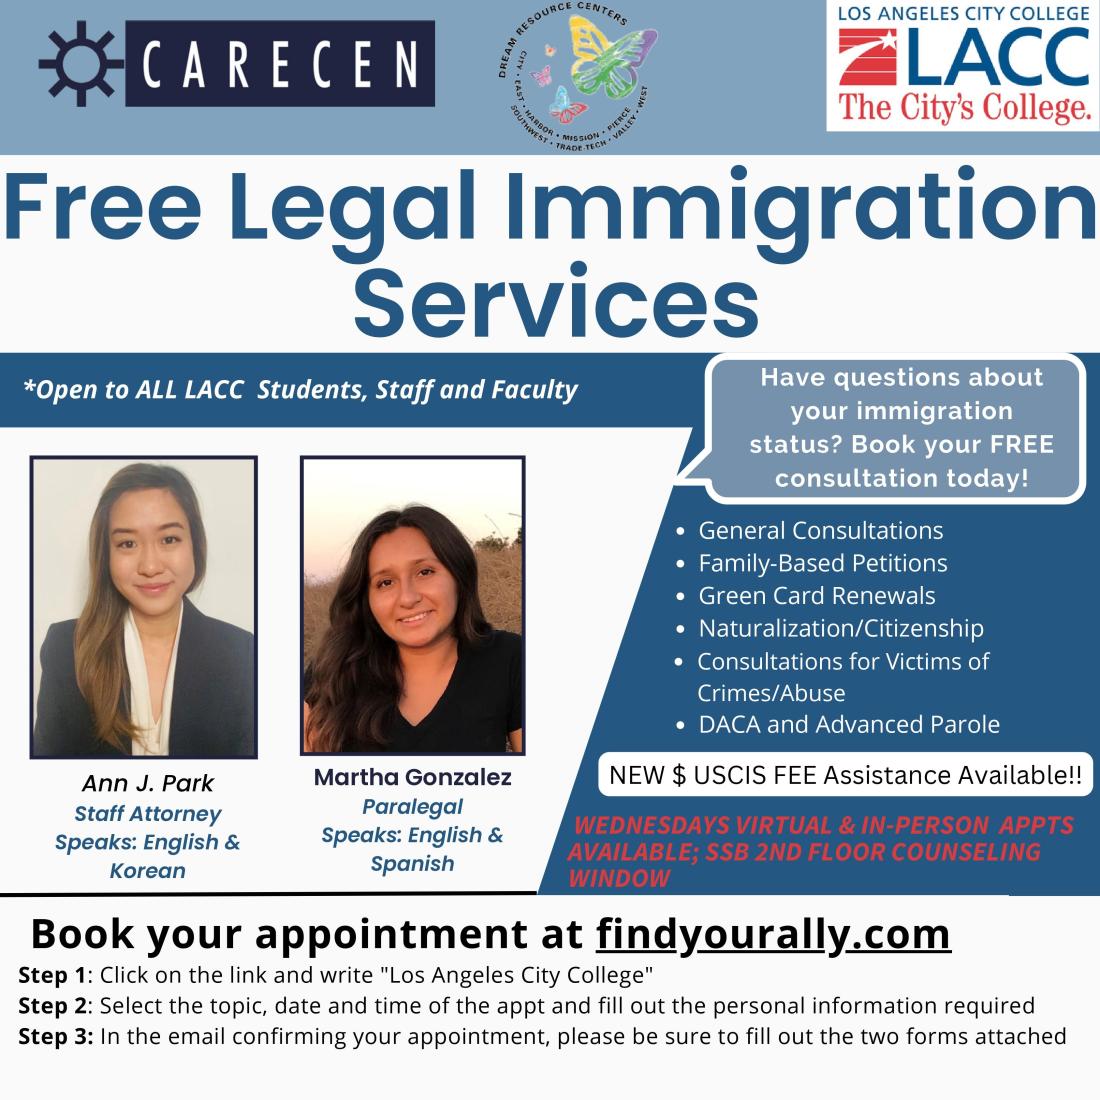 CARECEN free legal immigration services flyer 